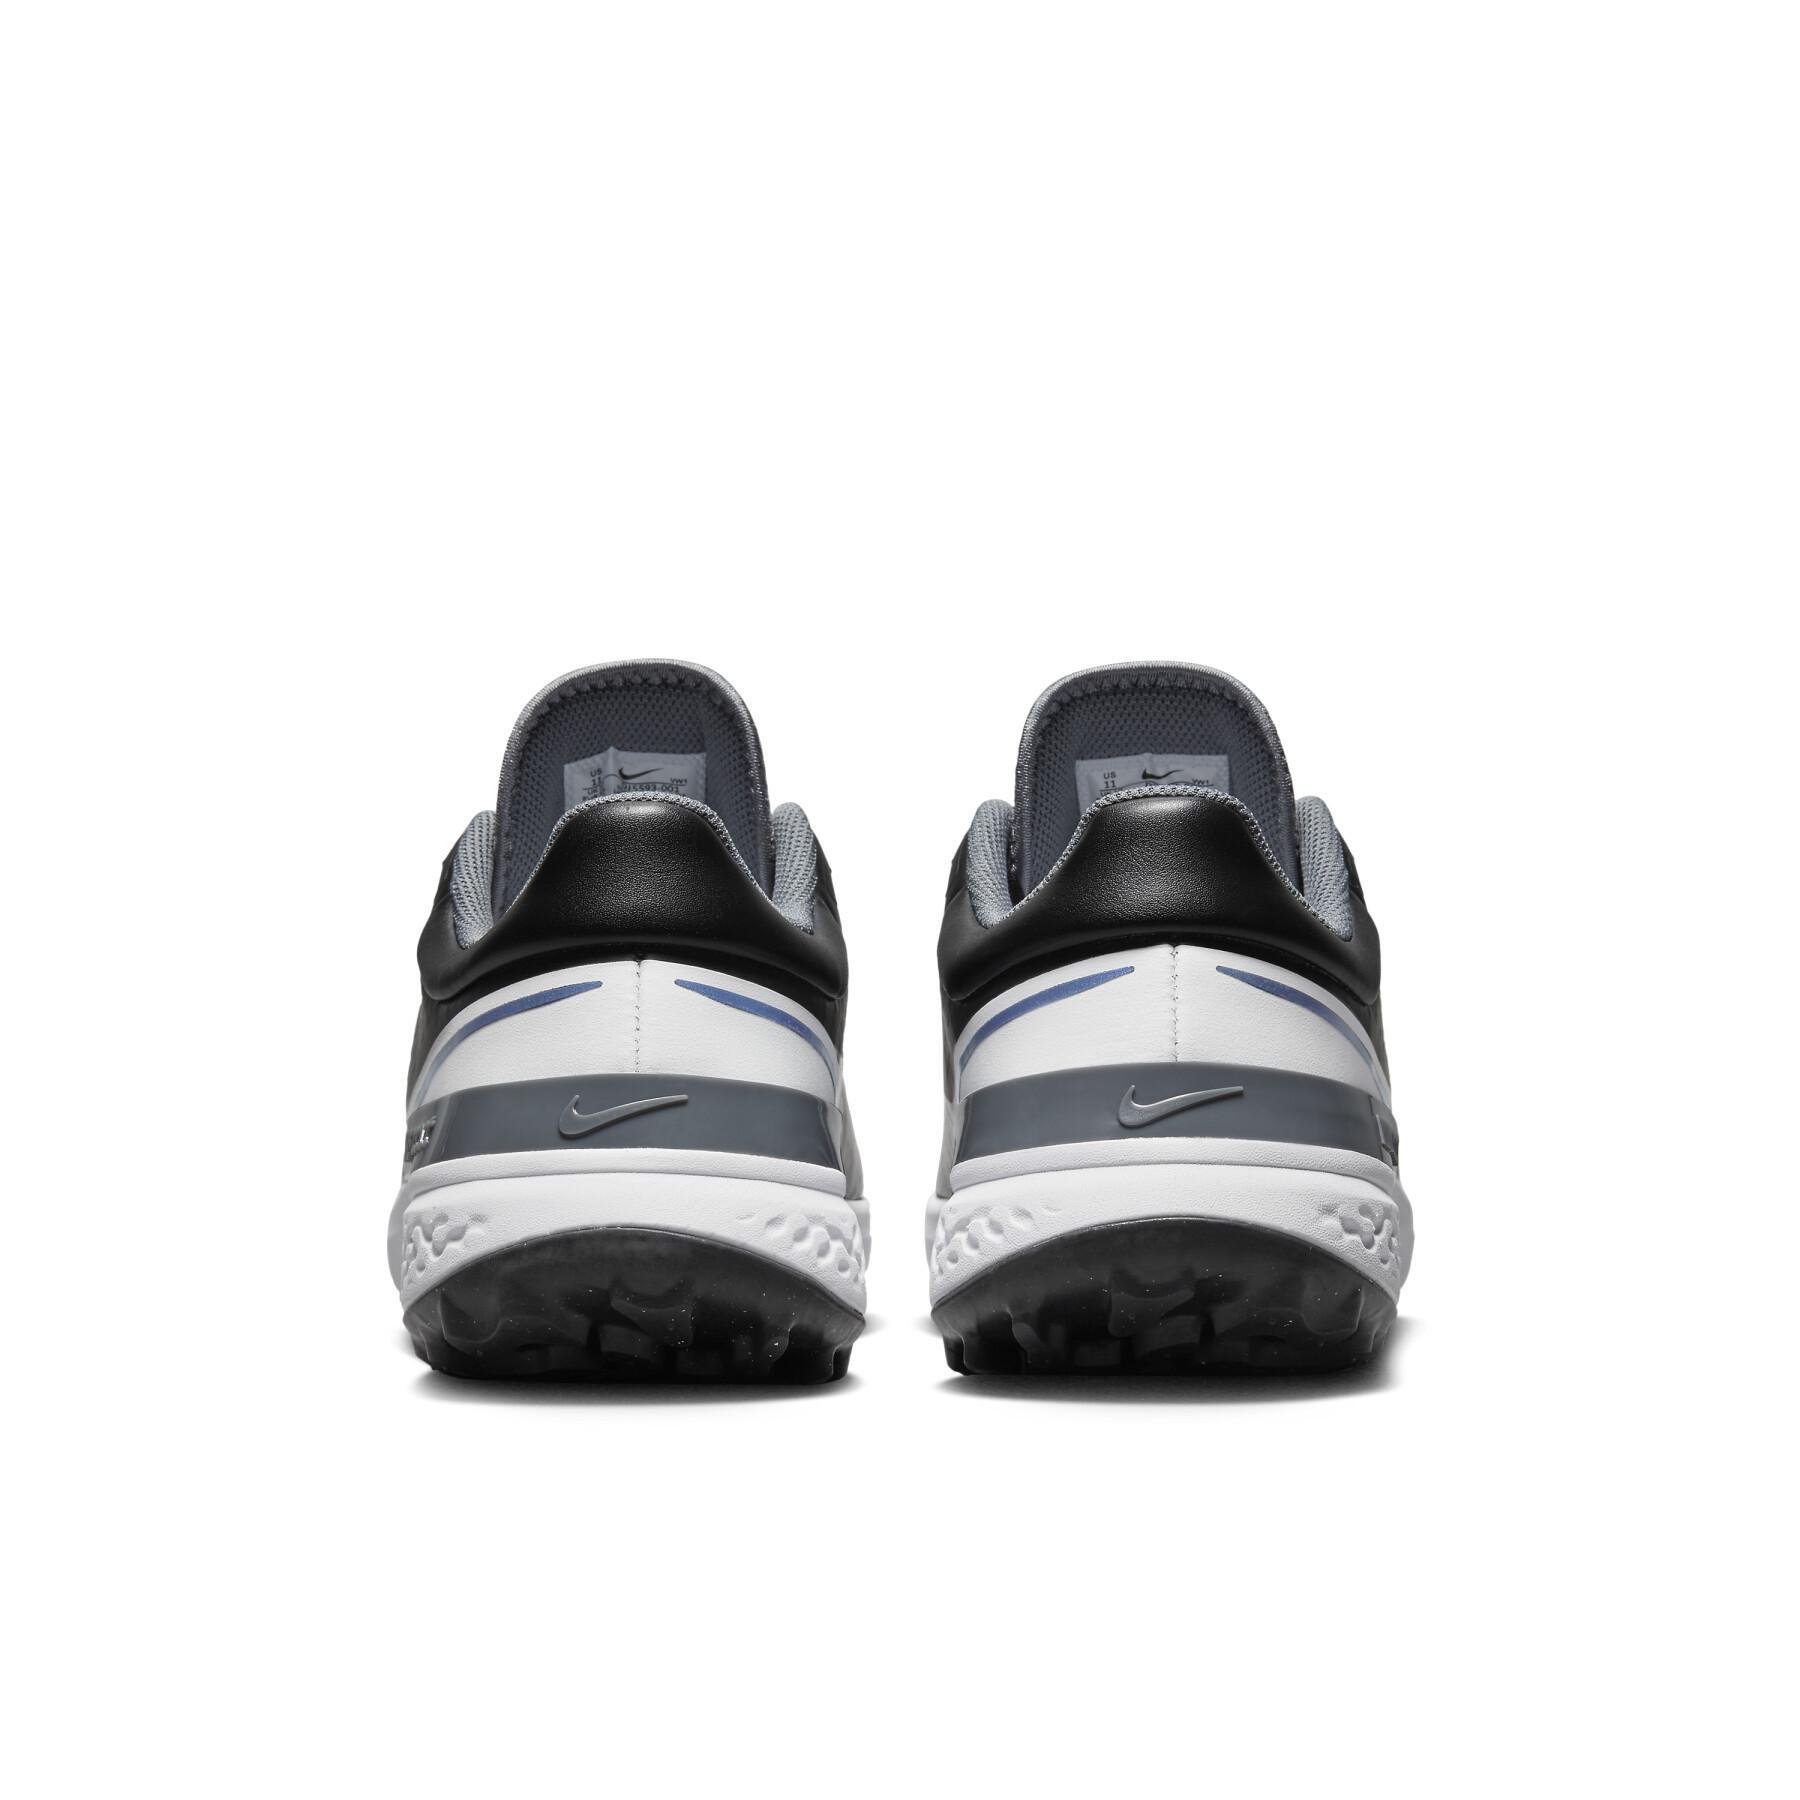 Chaussures de golf enfant Nike Infinity Pro 2